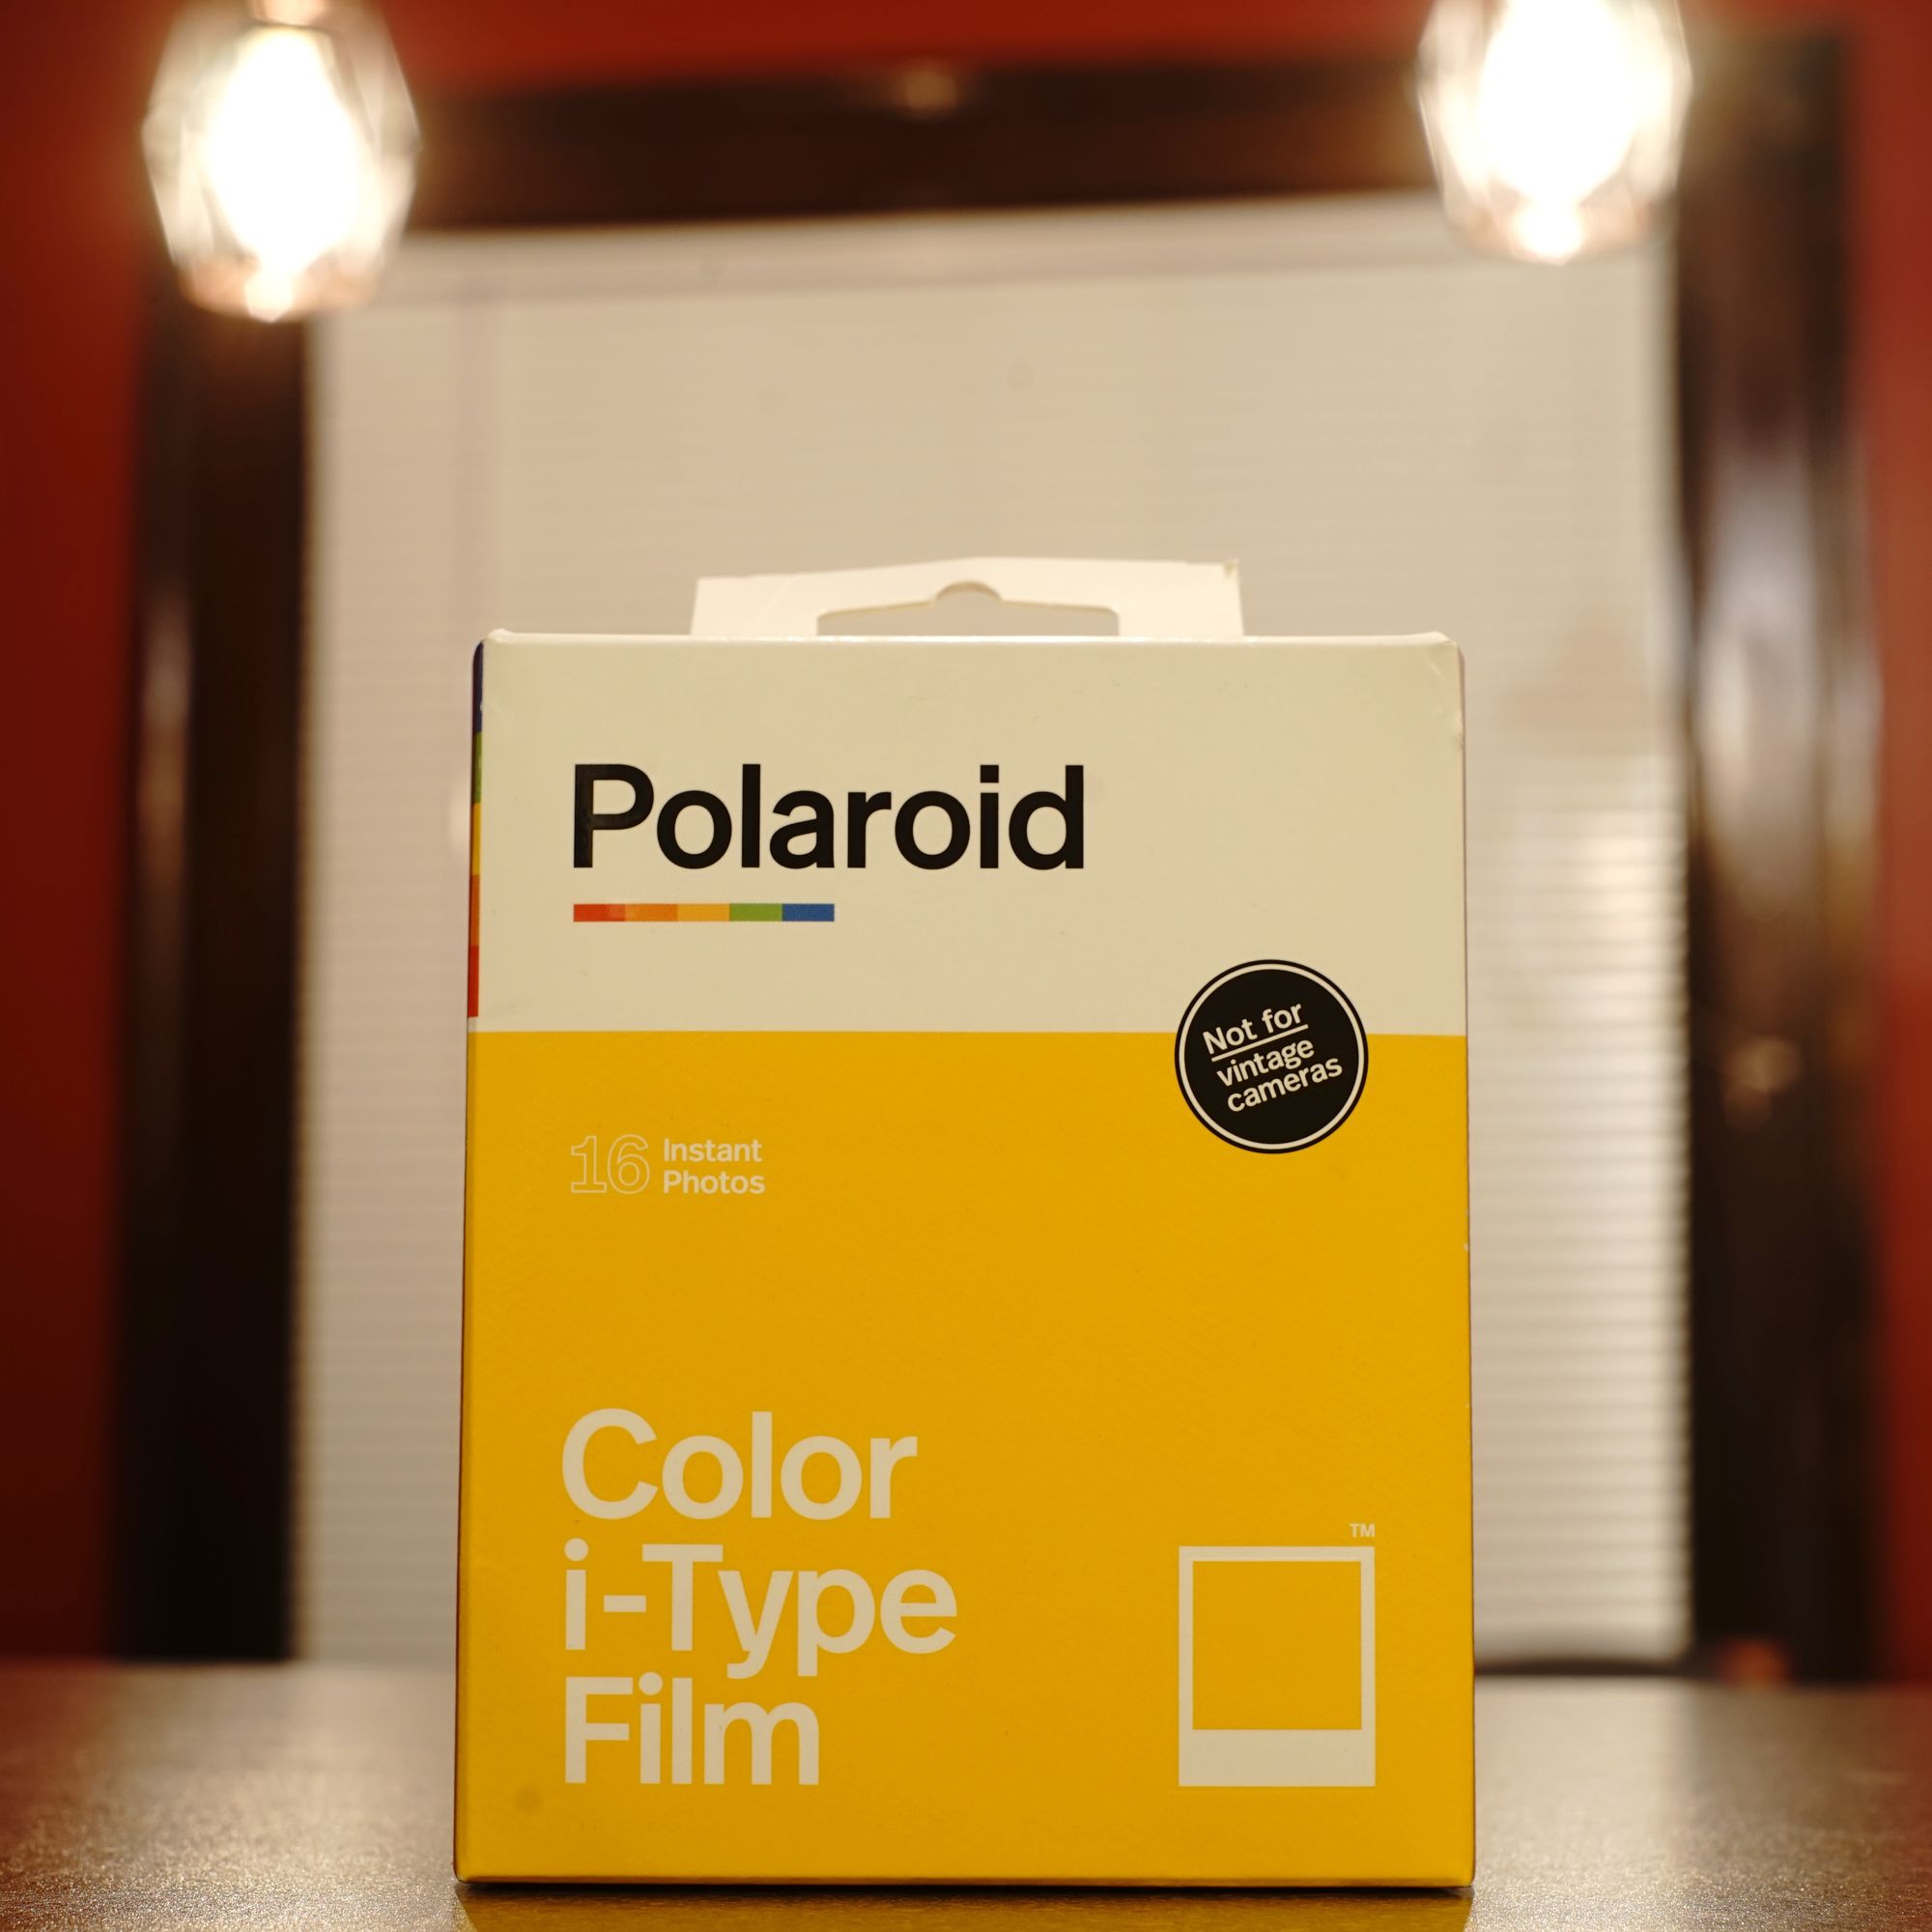 Leaked: Polaroid Now Camera